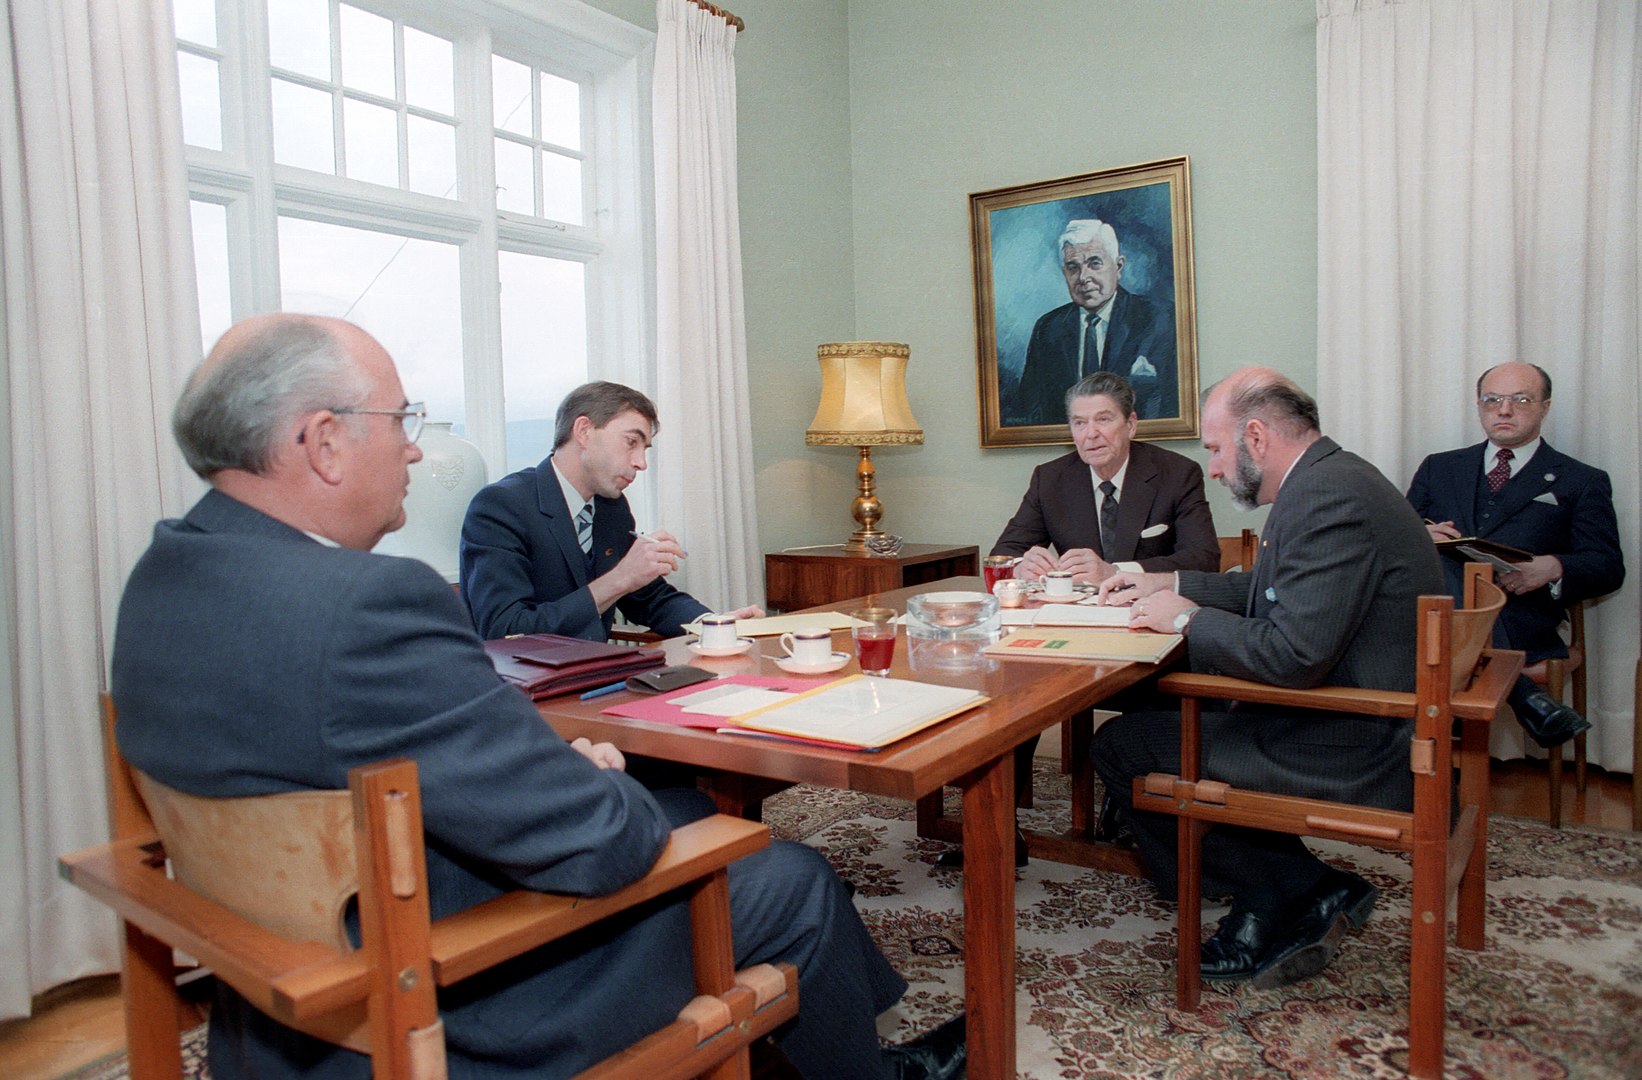 Negotiations at the 1986 Reykjavik Summit.